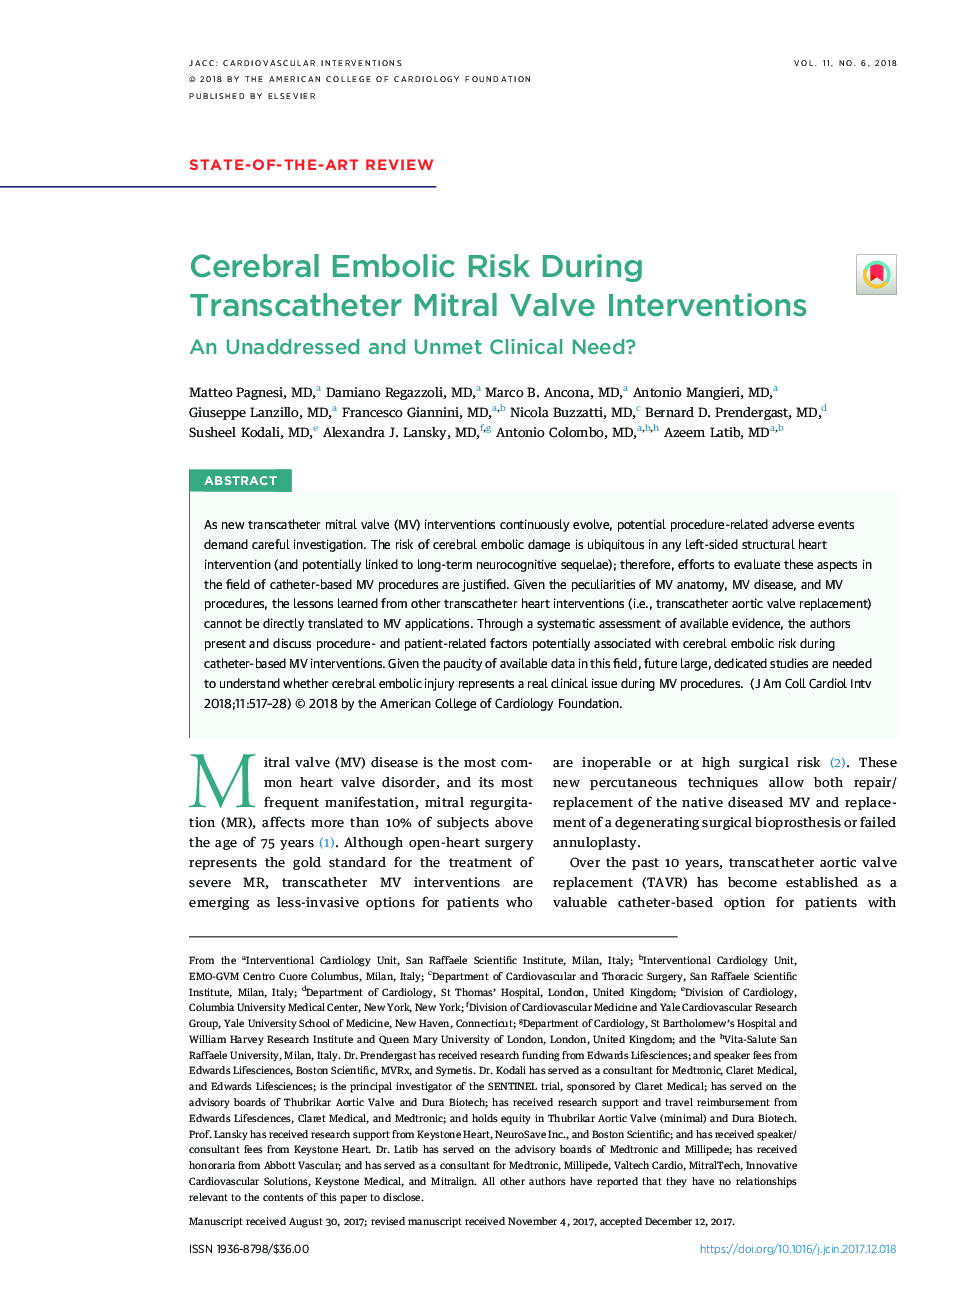 Cerebral Embolic Risk During Transcatheter Mitral Valve Interventions